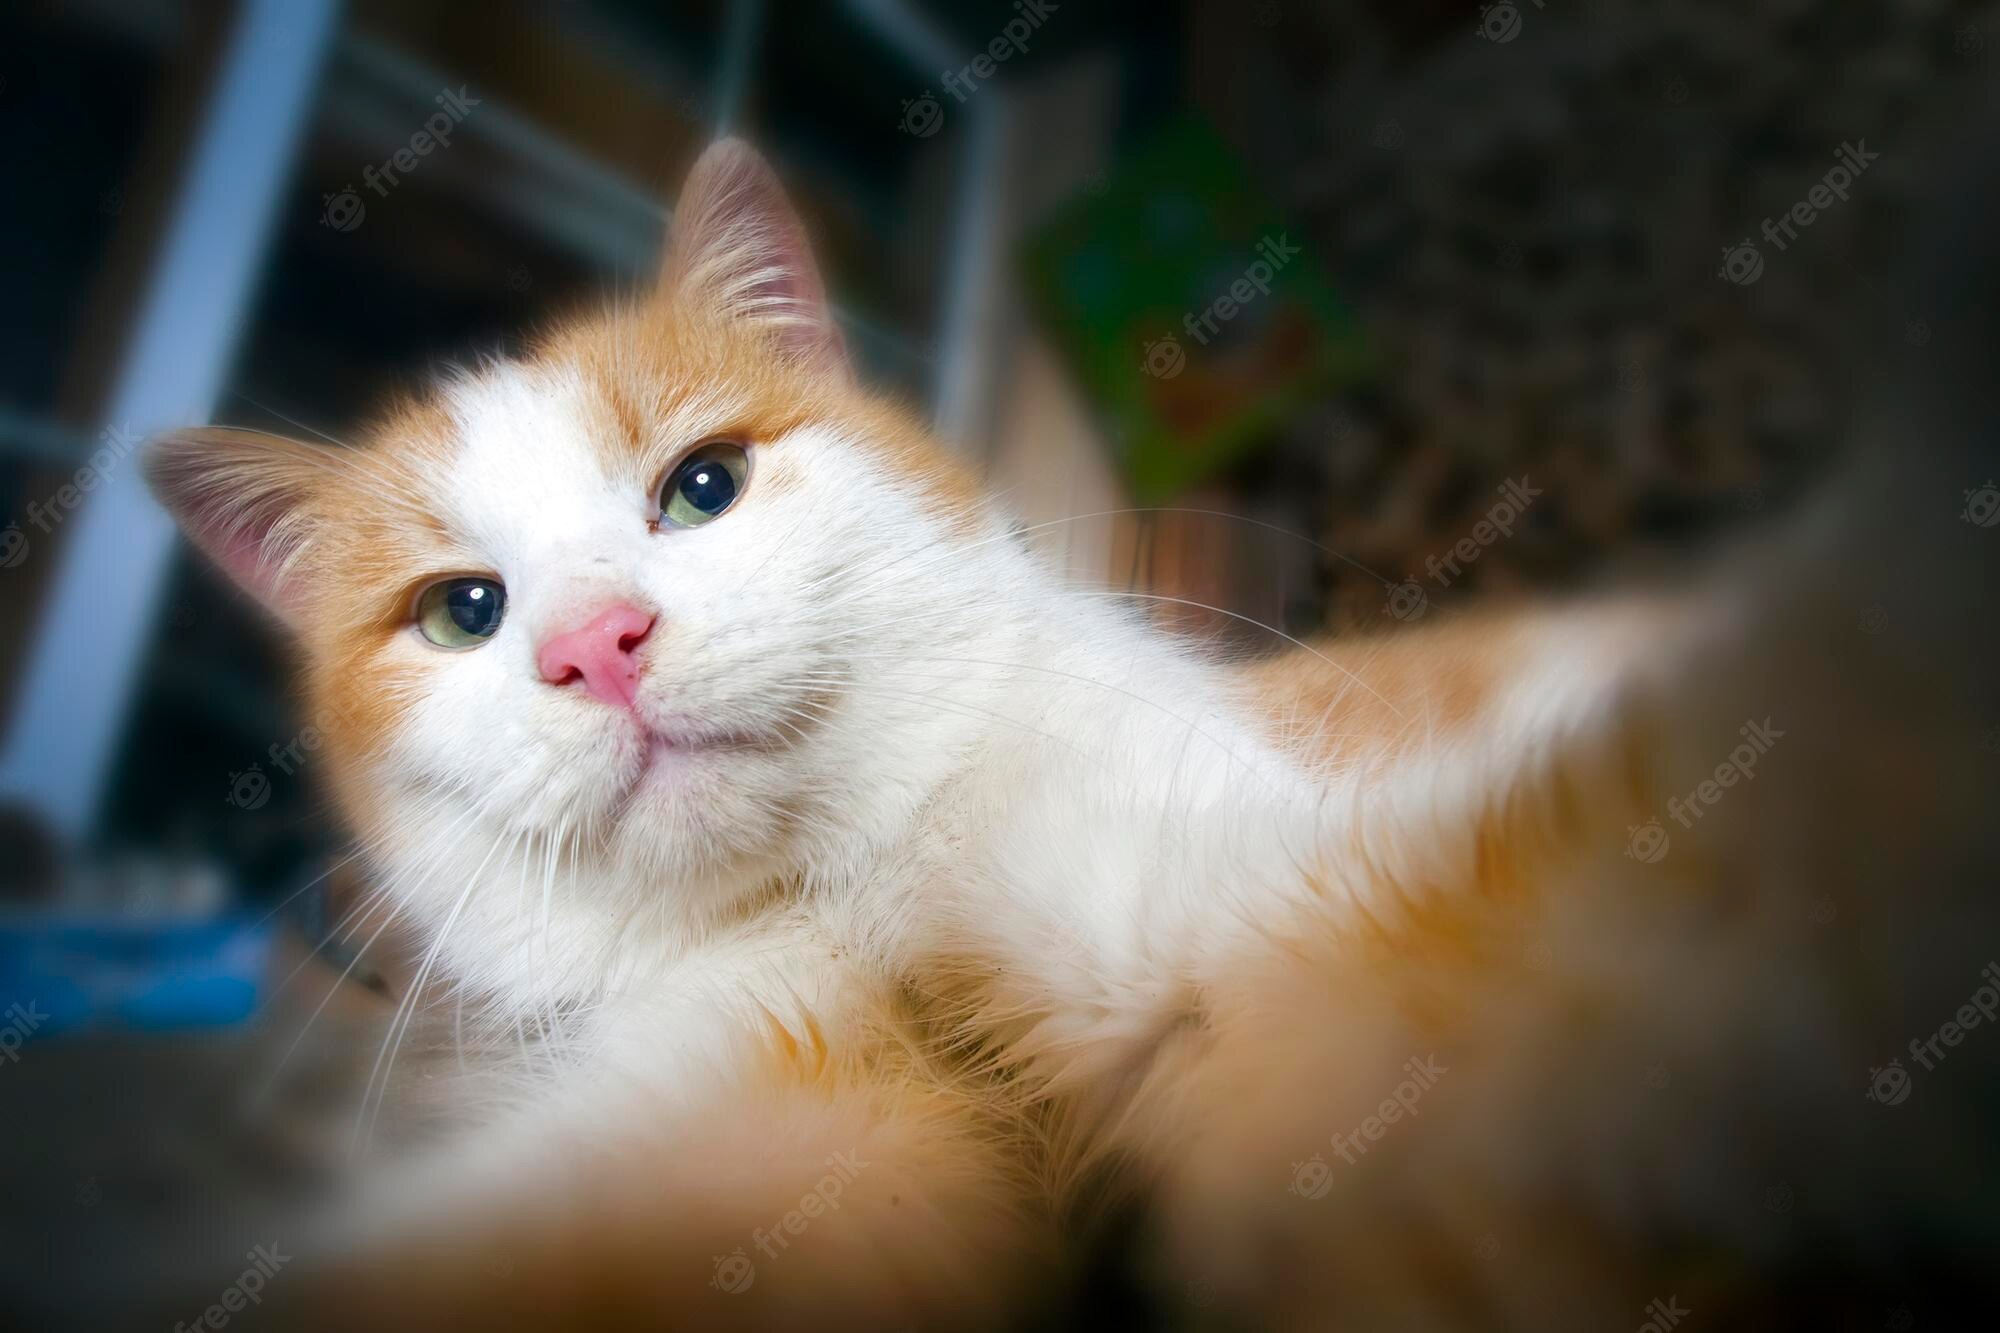 Cat Selfie Image. Free Vectors, & PSD